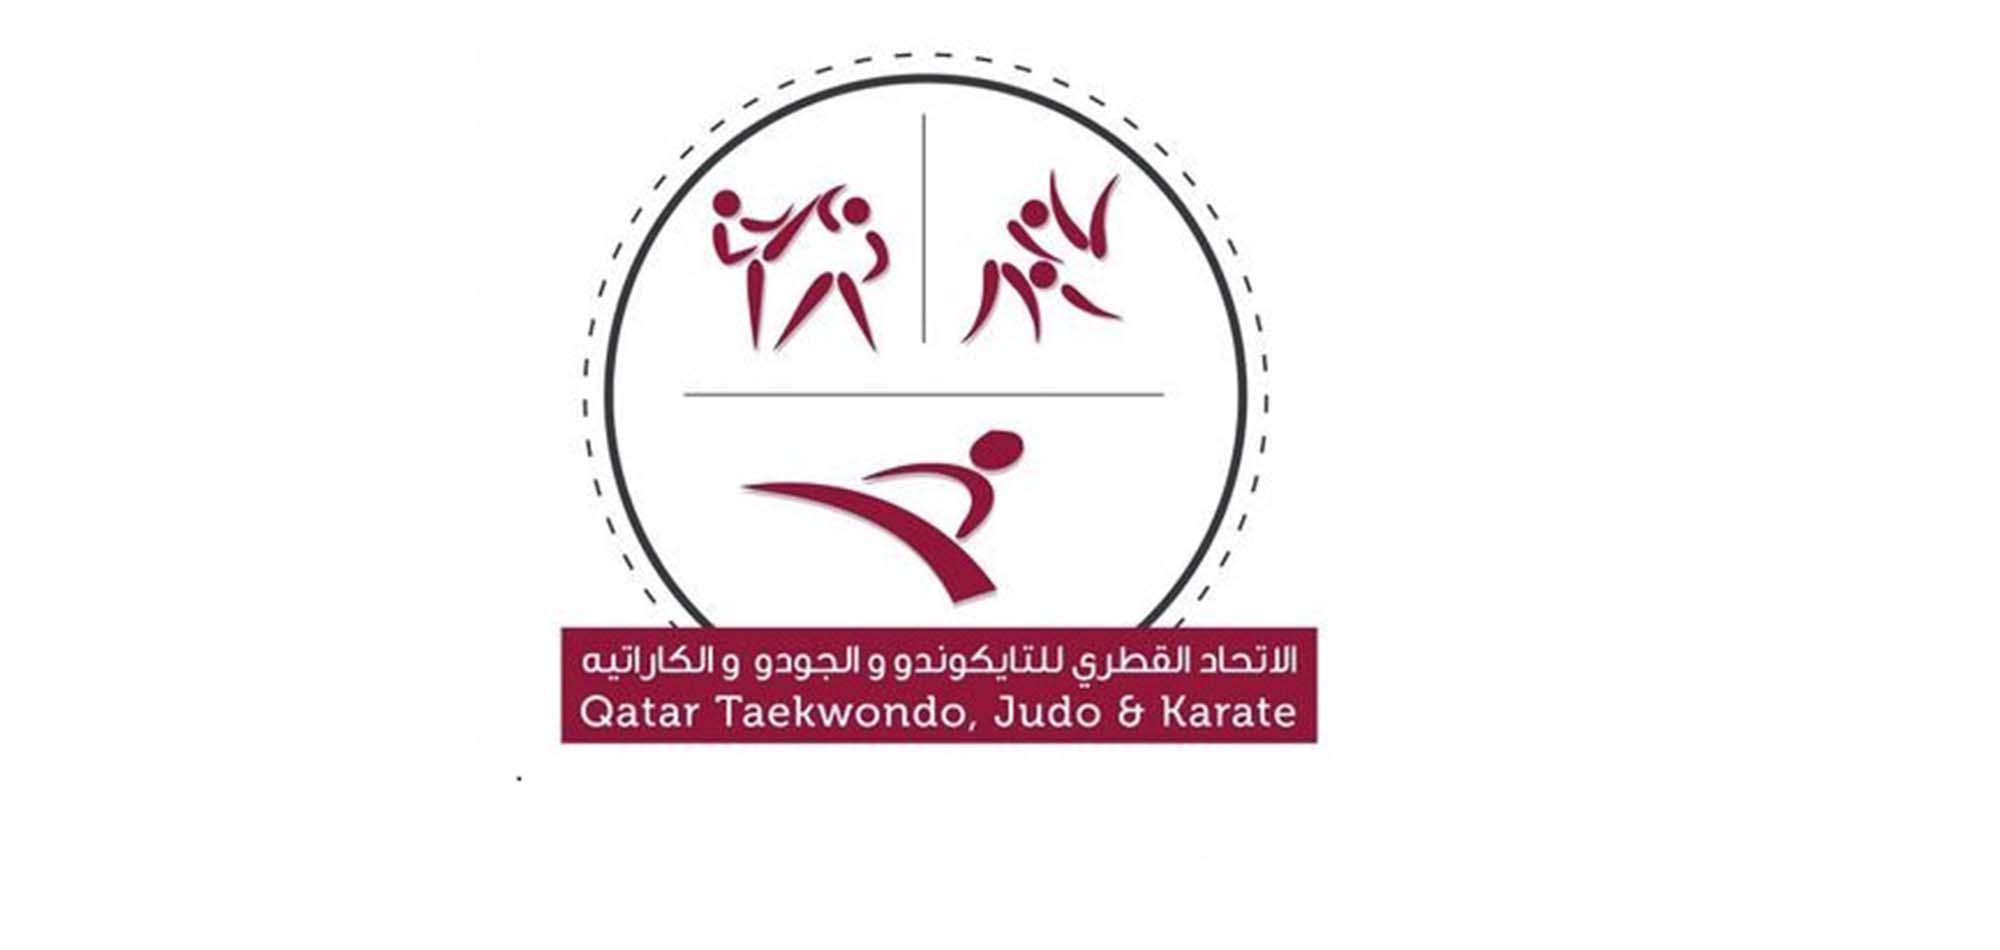 Qatar Taekwondo, Judo & Karate Federation postpones 2020 IJF Masters